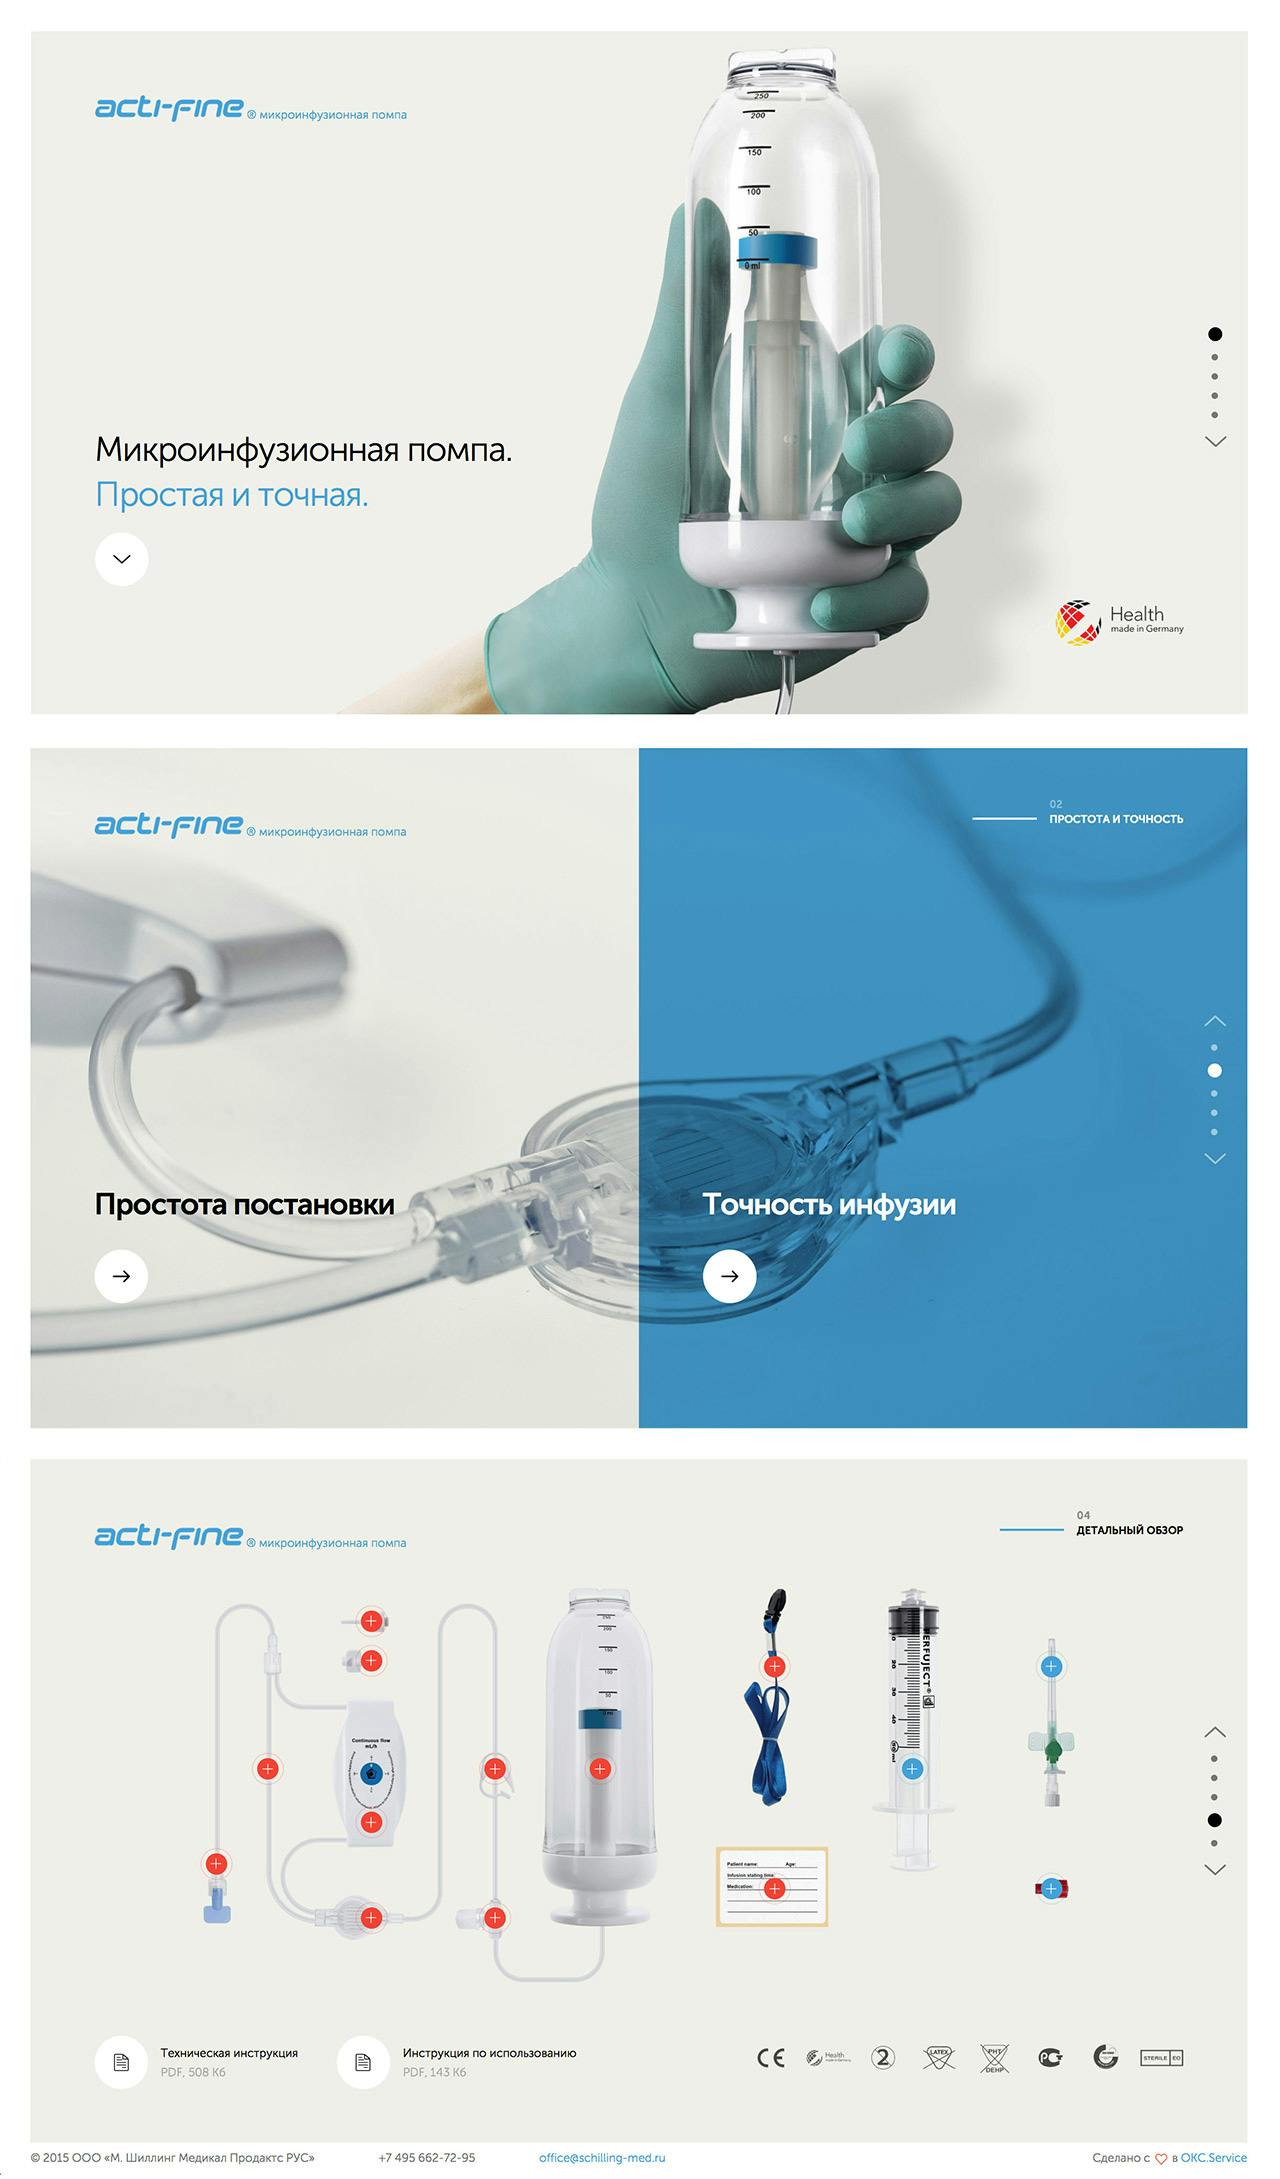 Acti-fine Microinfusion Pump Website Screenshot